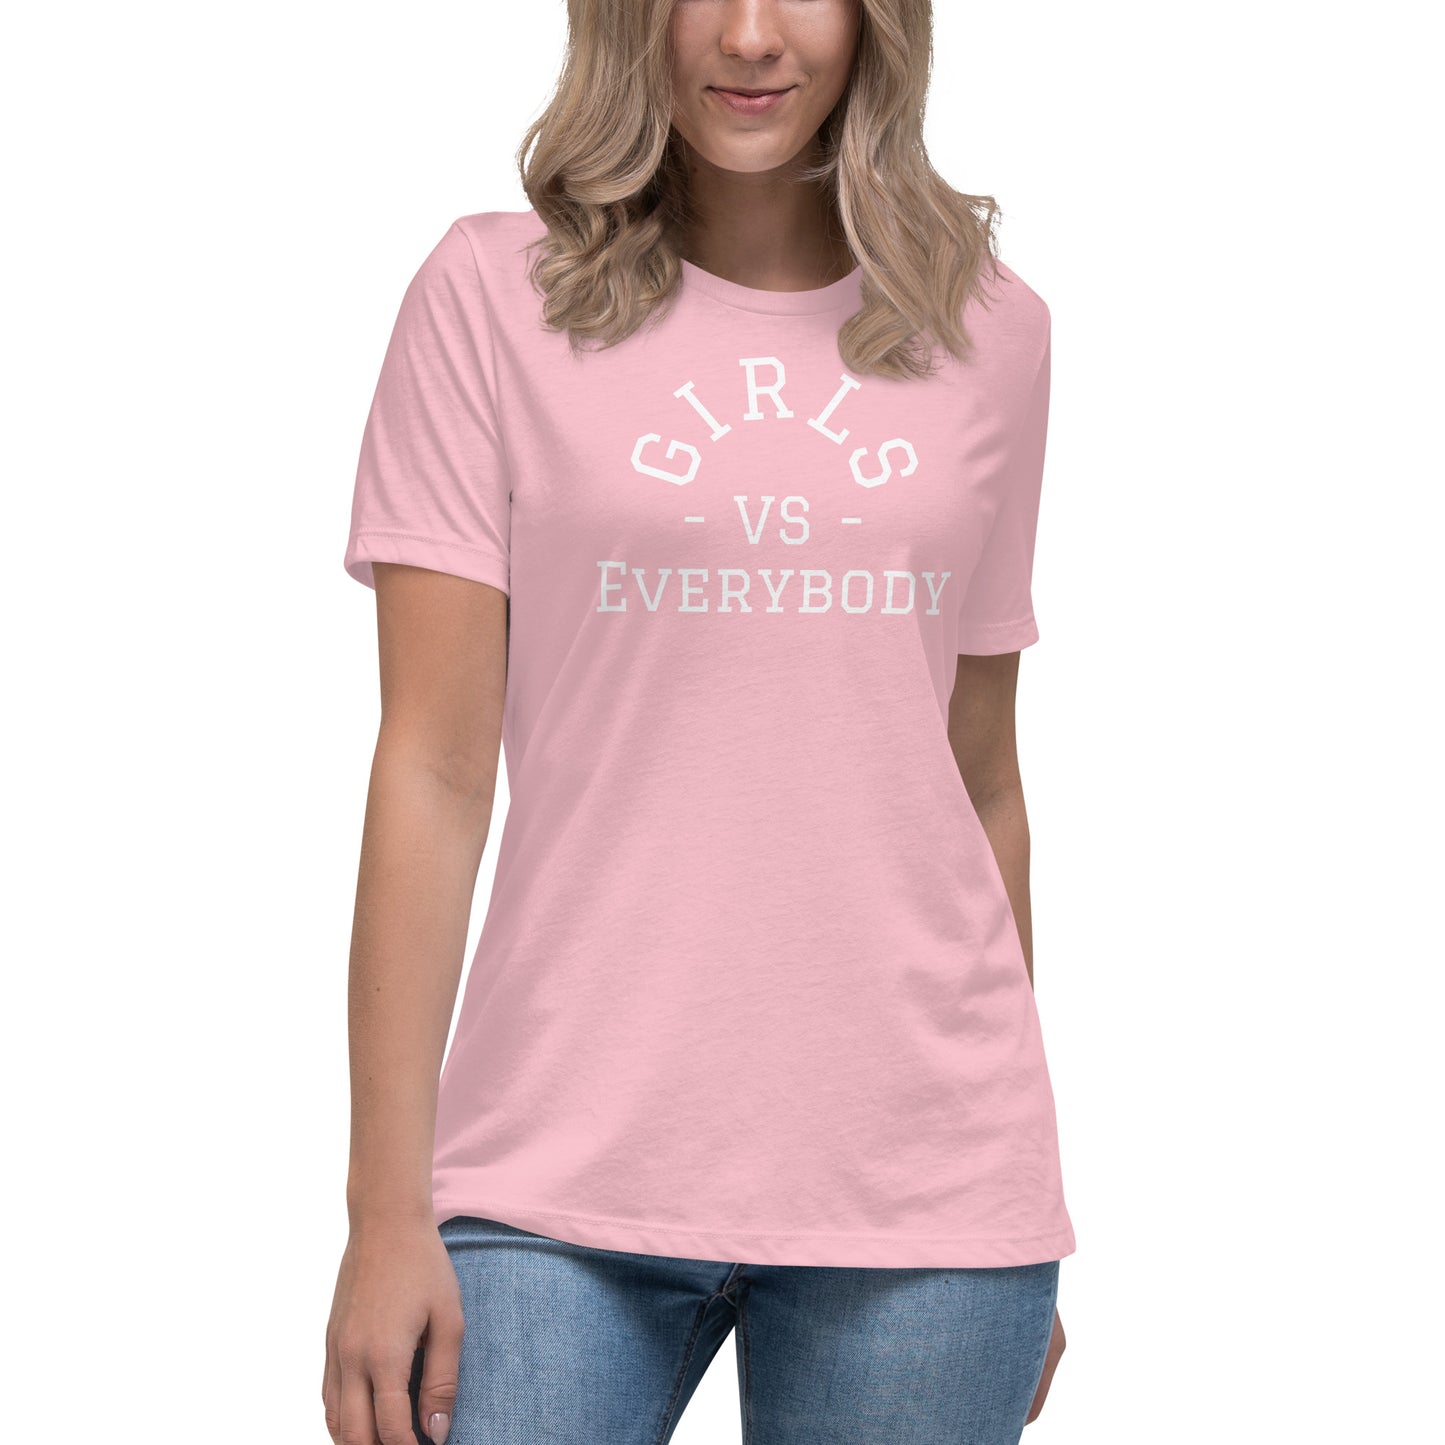 Best women's pink short sleeve graphic tee shirt that says "Girls VS Everybody"